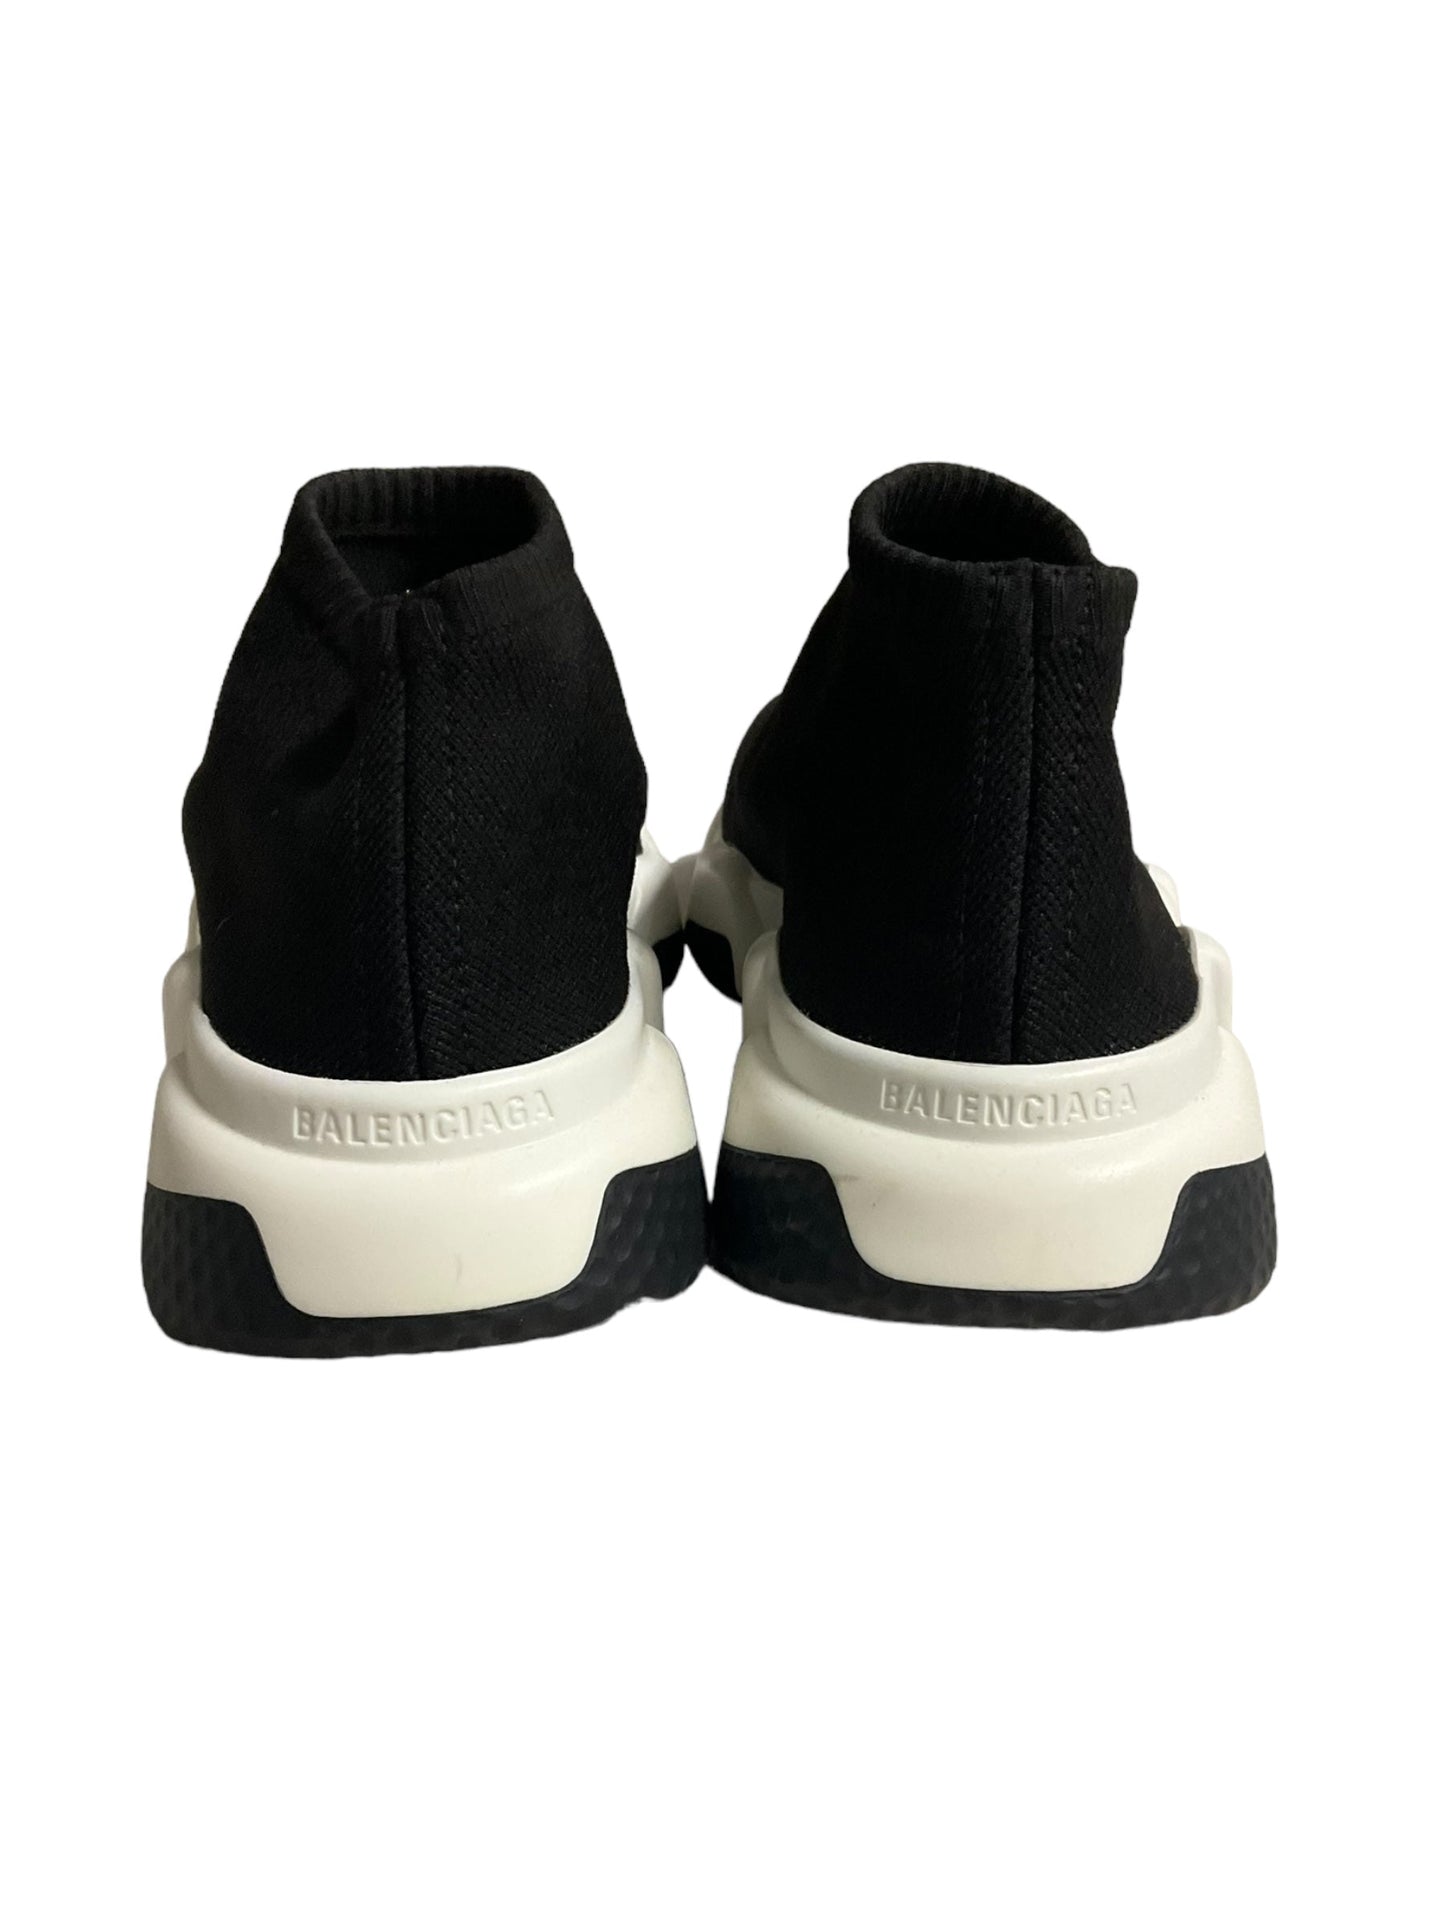 Black & White Shoes Luxury Designer Balenciaga, Size 8